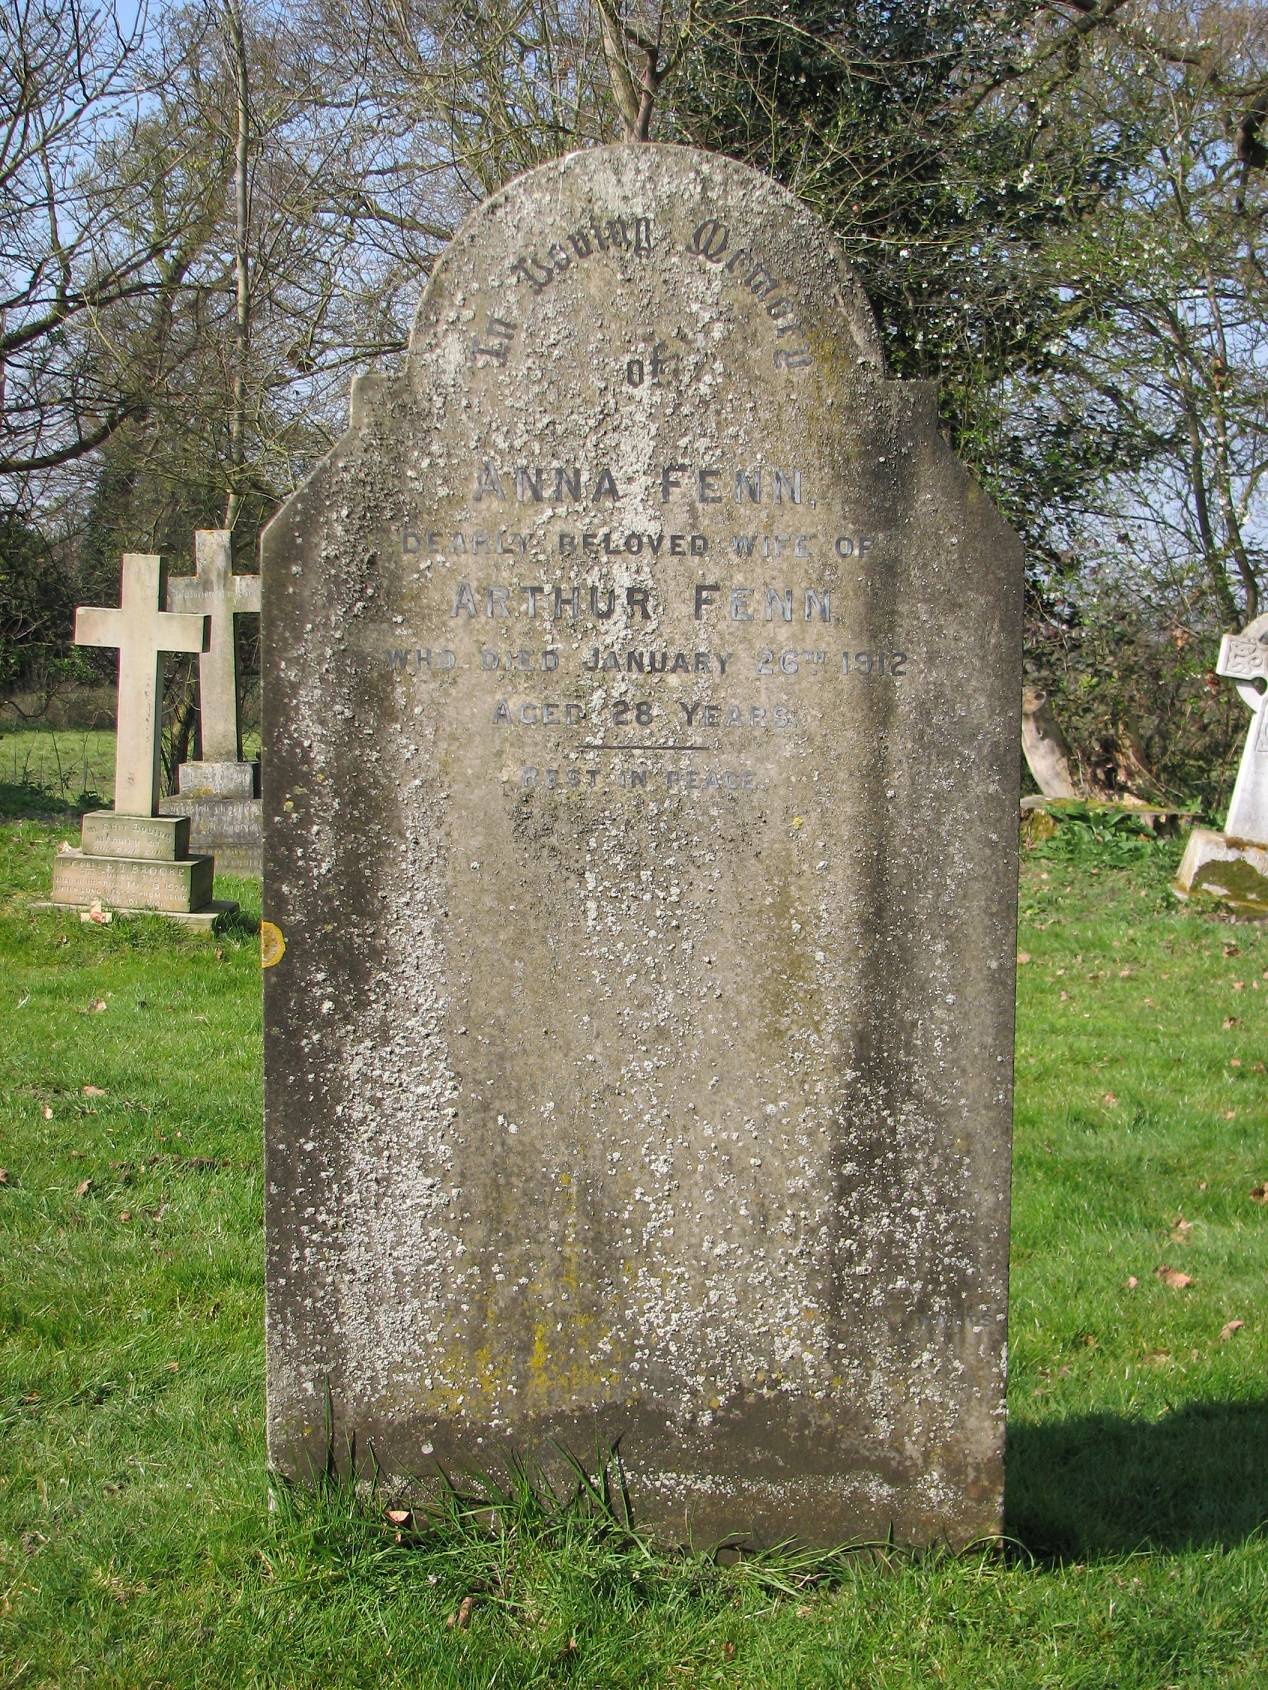 Anne Fenn's gravestone in East Bergholt Cemetery<br>MA